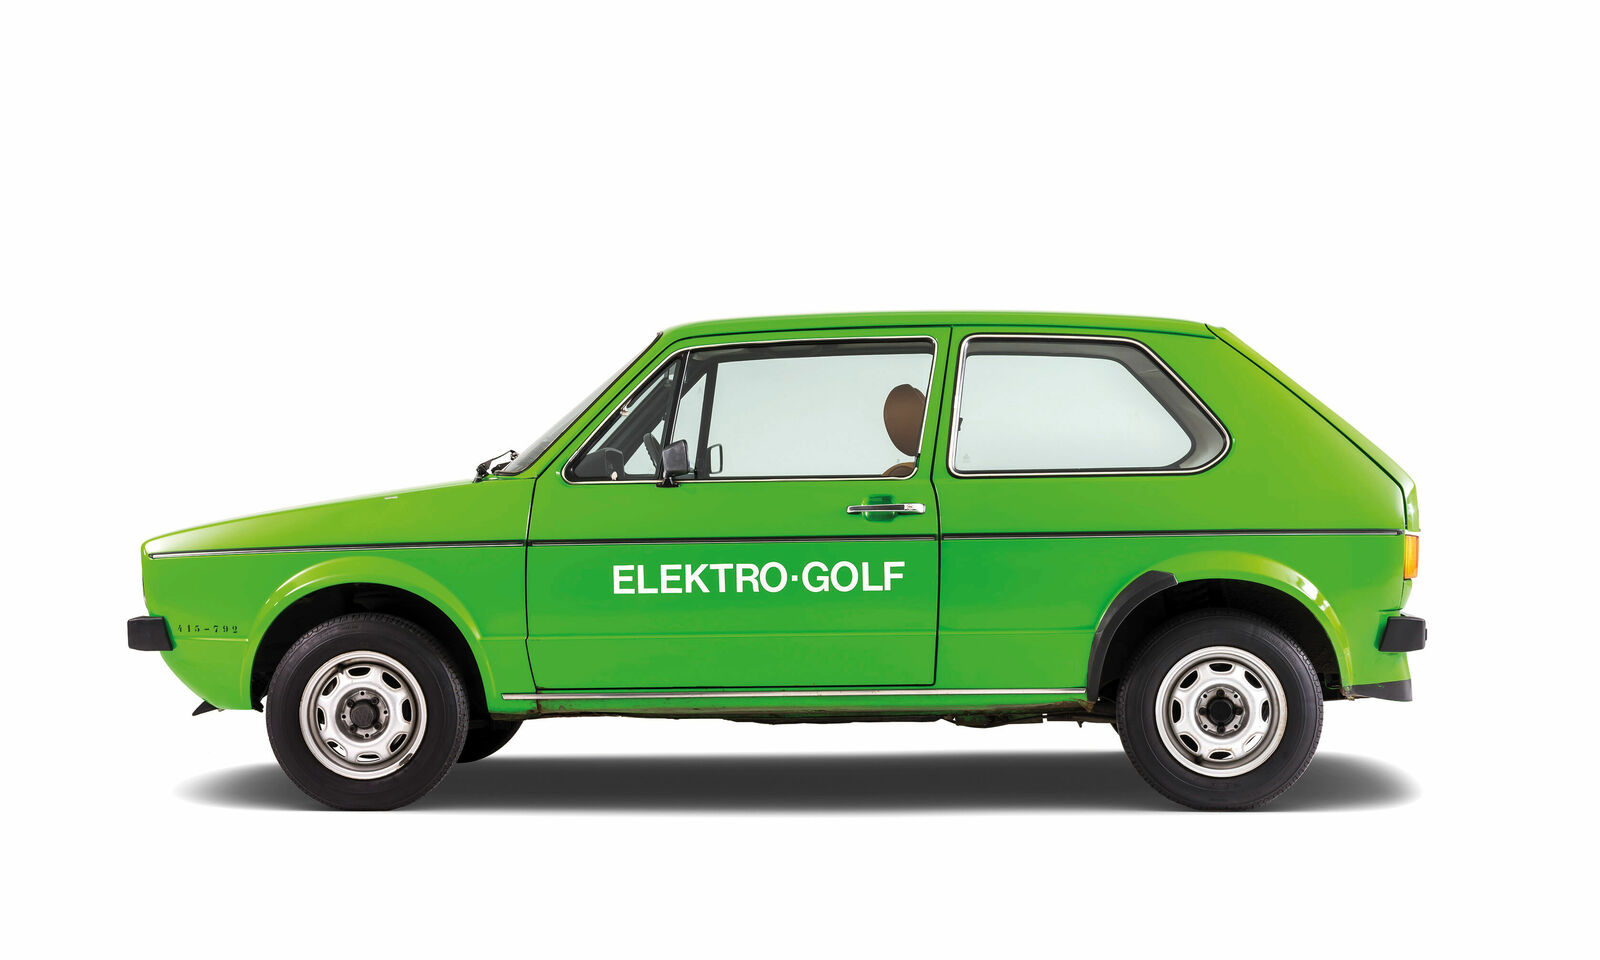 The 1976 Elektro-Golf I